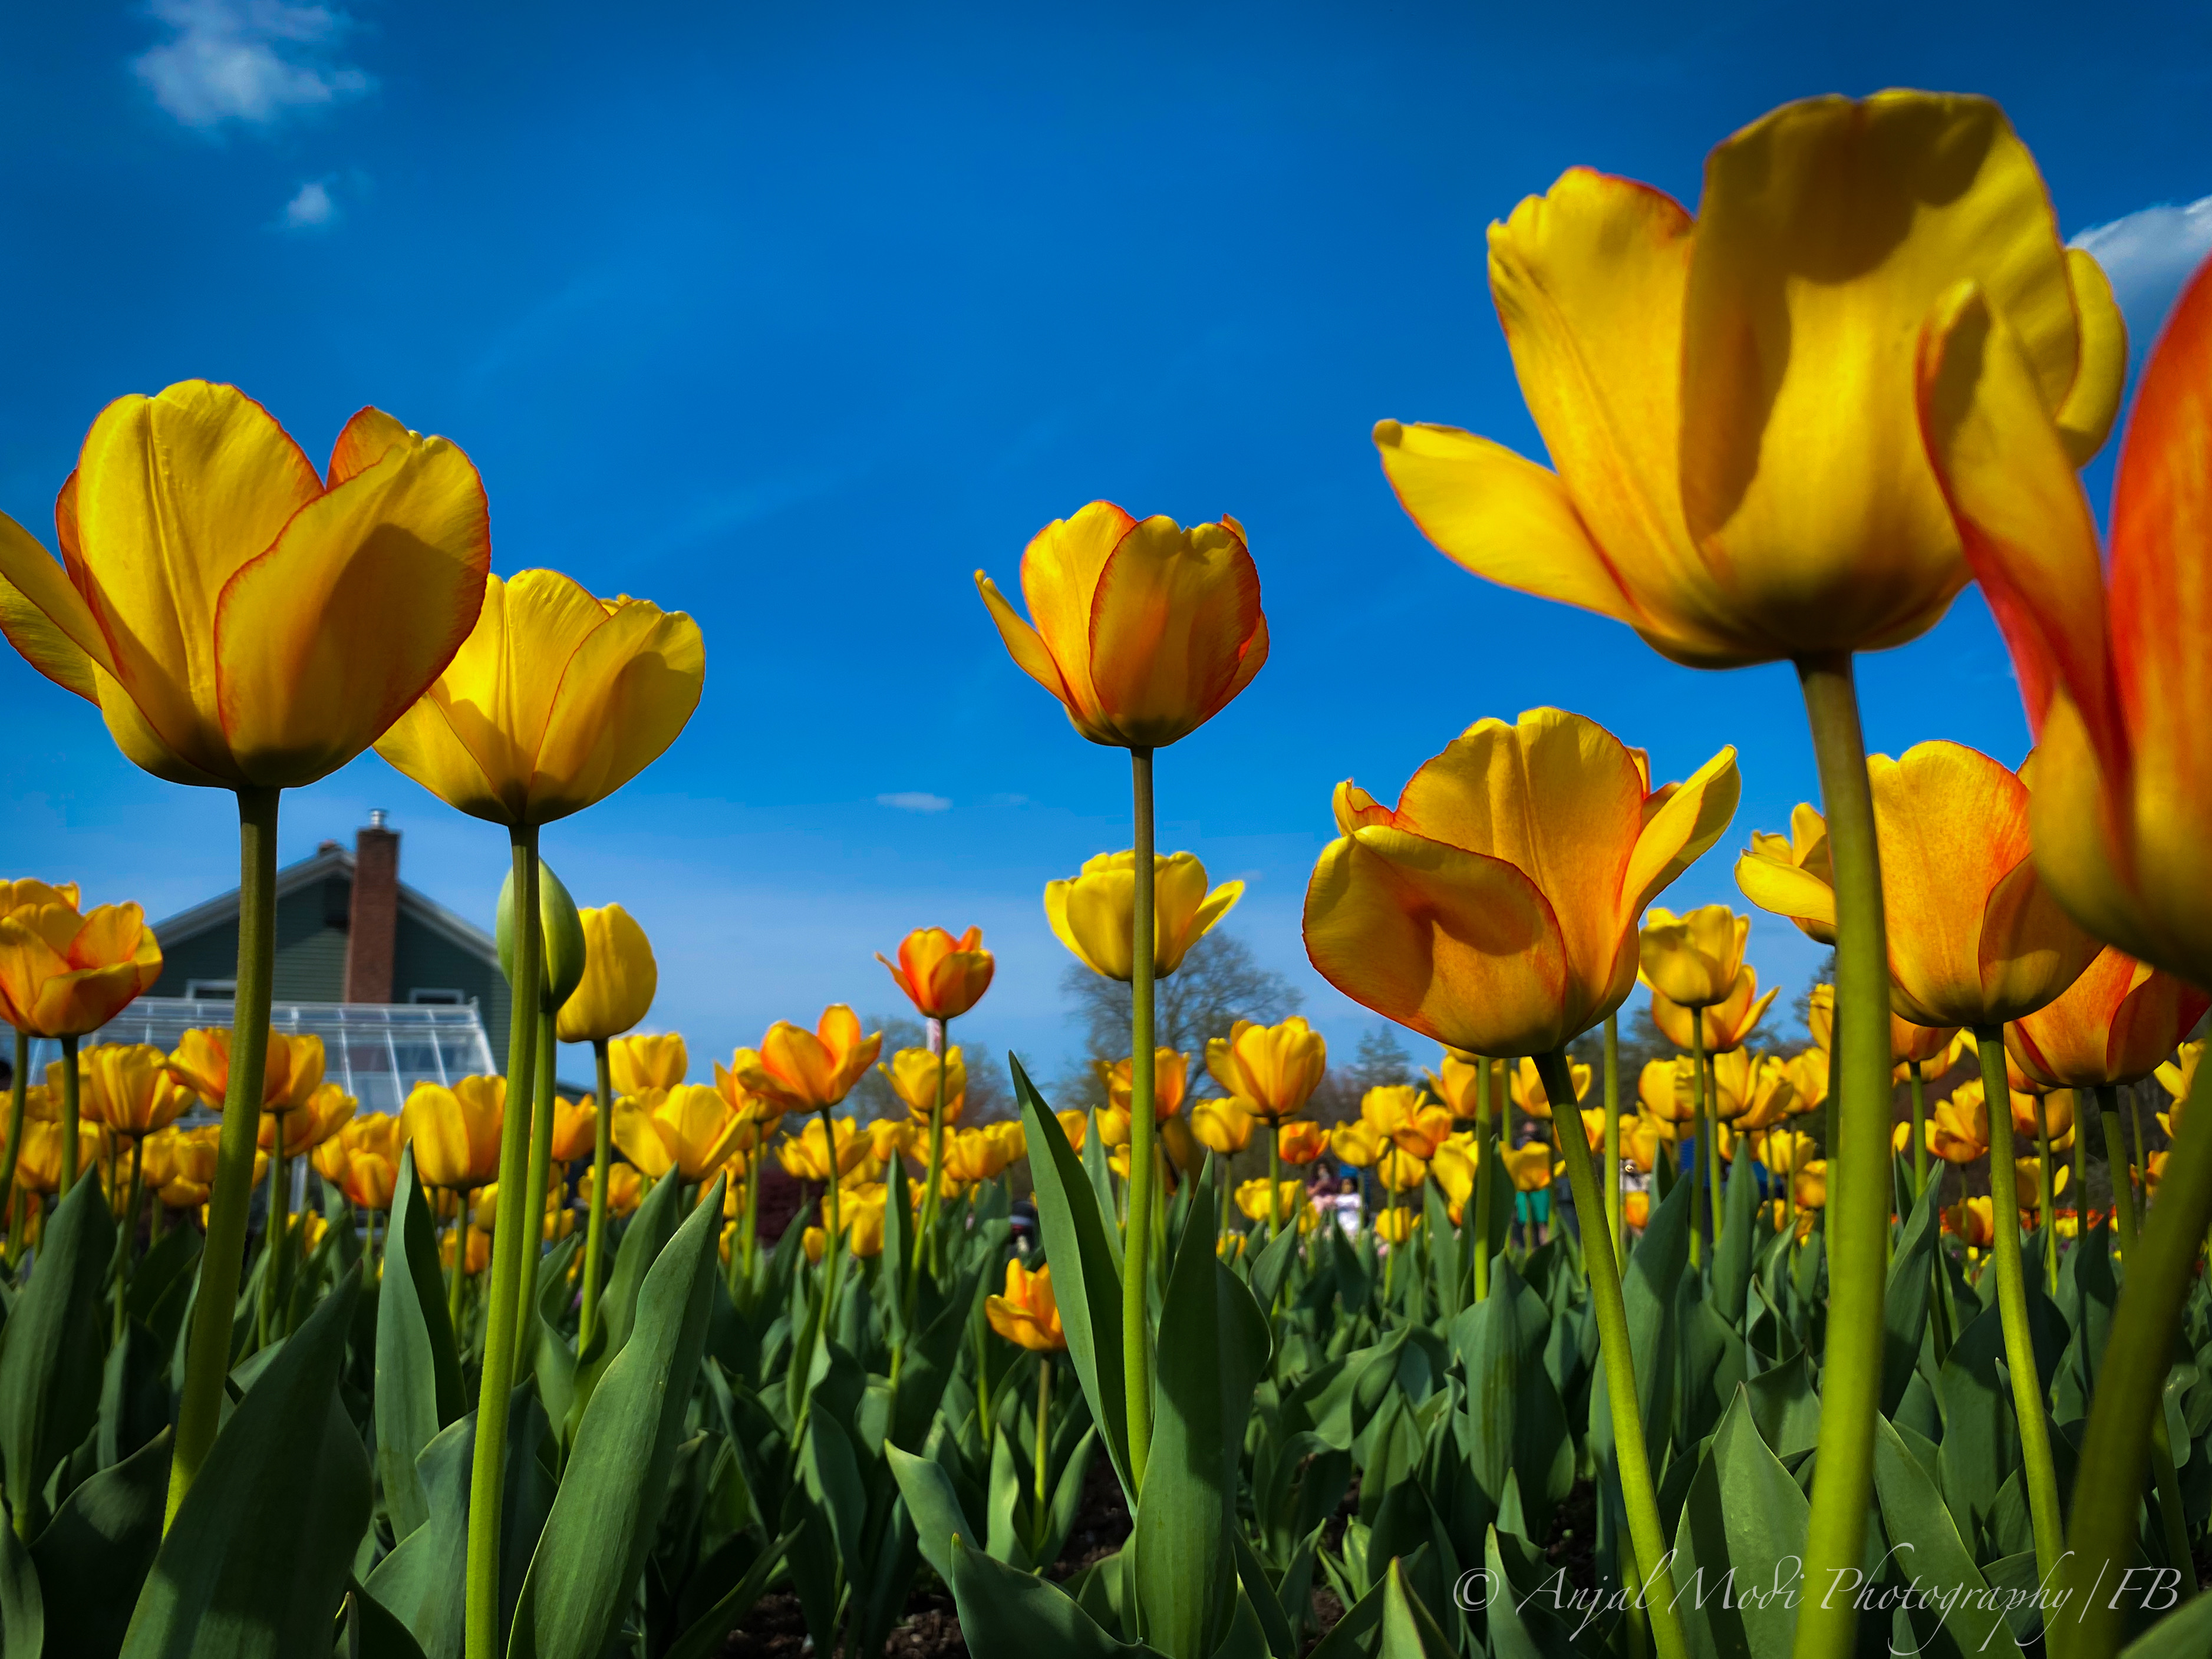 “The Yellow Drama” by king#flower #flowerphotography #nature #flowers #tulips #tulipfestival #yellowaesthetics #blue #blueaesthetic #background #backgrou